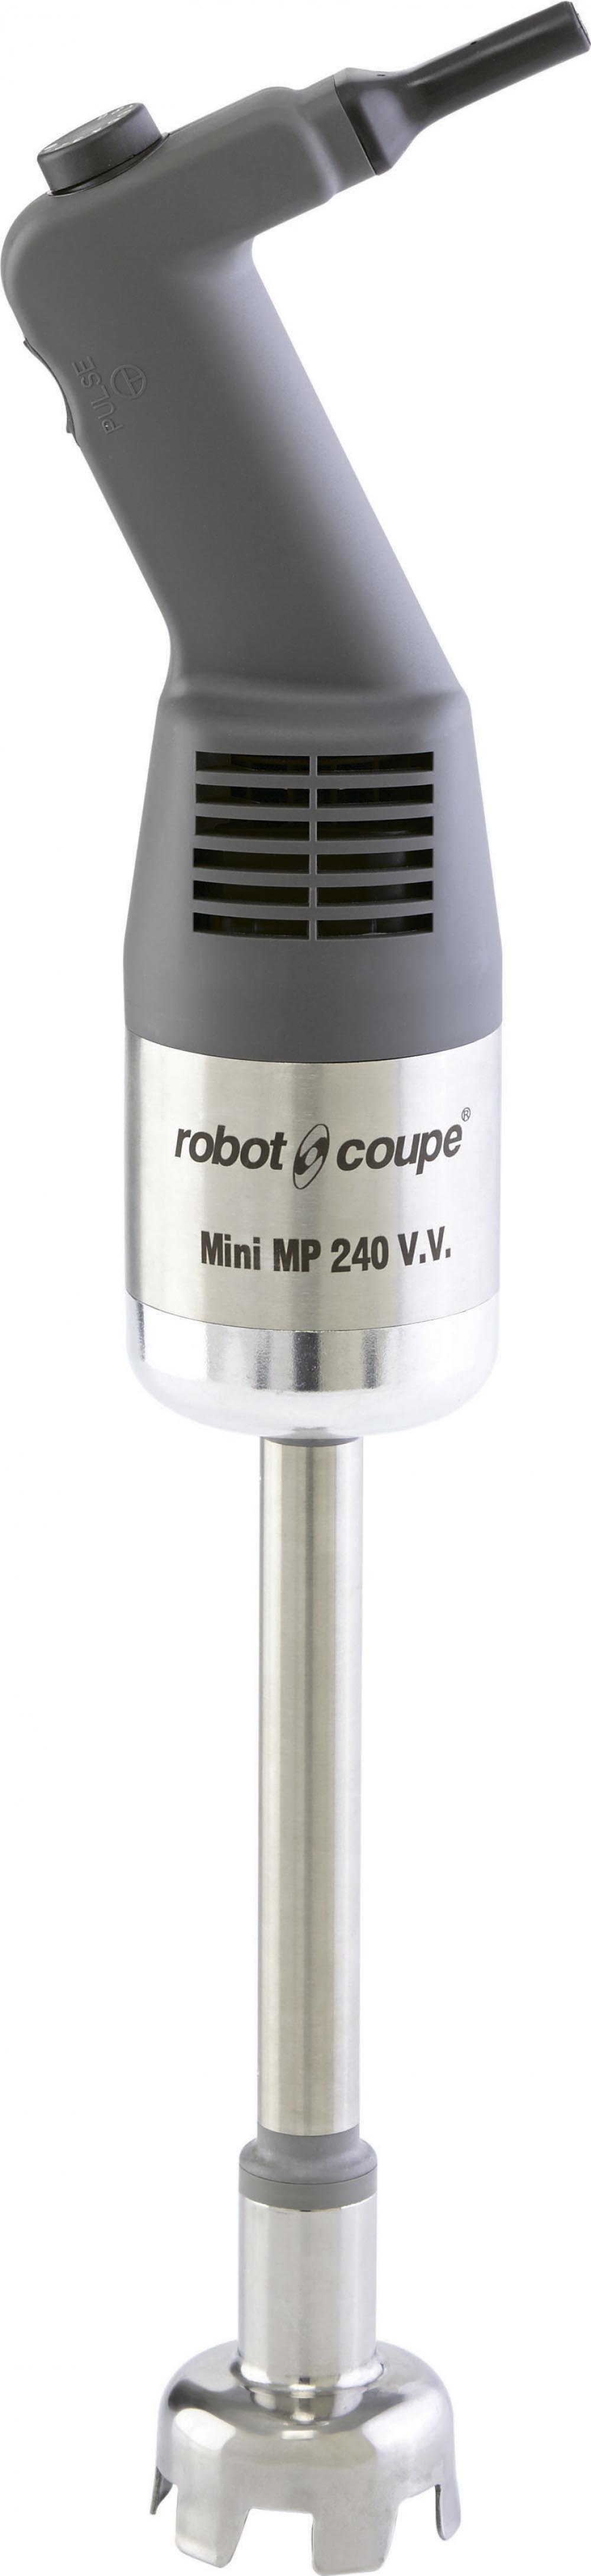 ROBOT COUPE MINIMP240VV MINI MP 240 V. V.: Ersatzteile